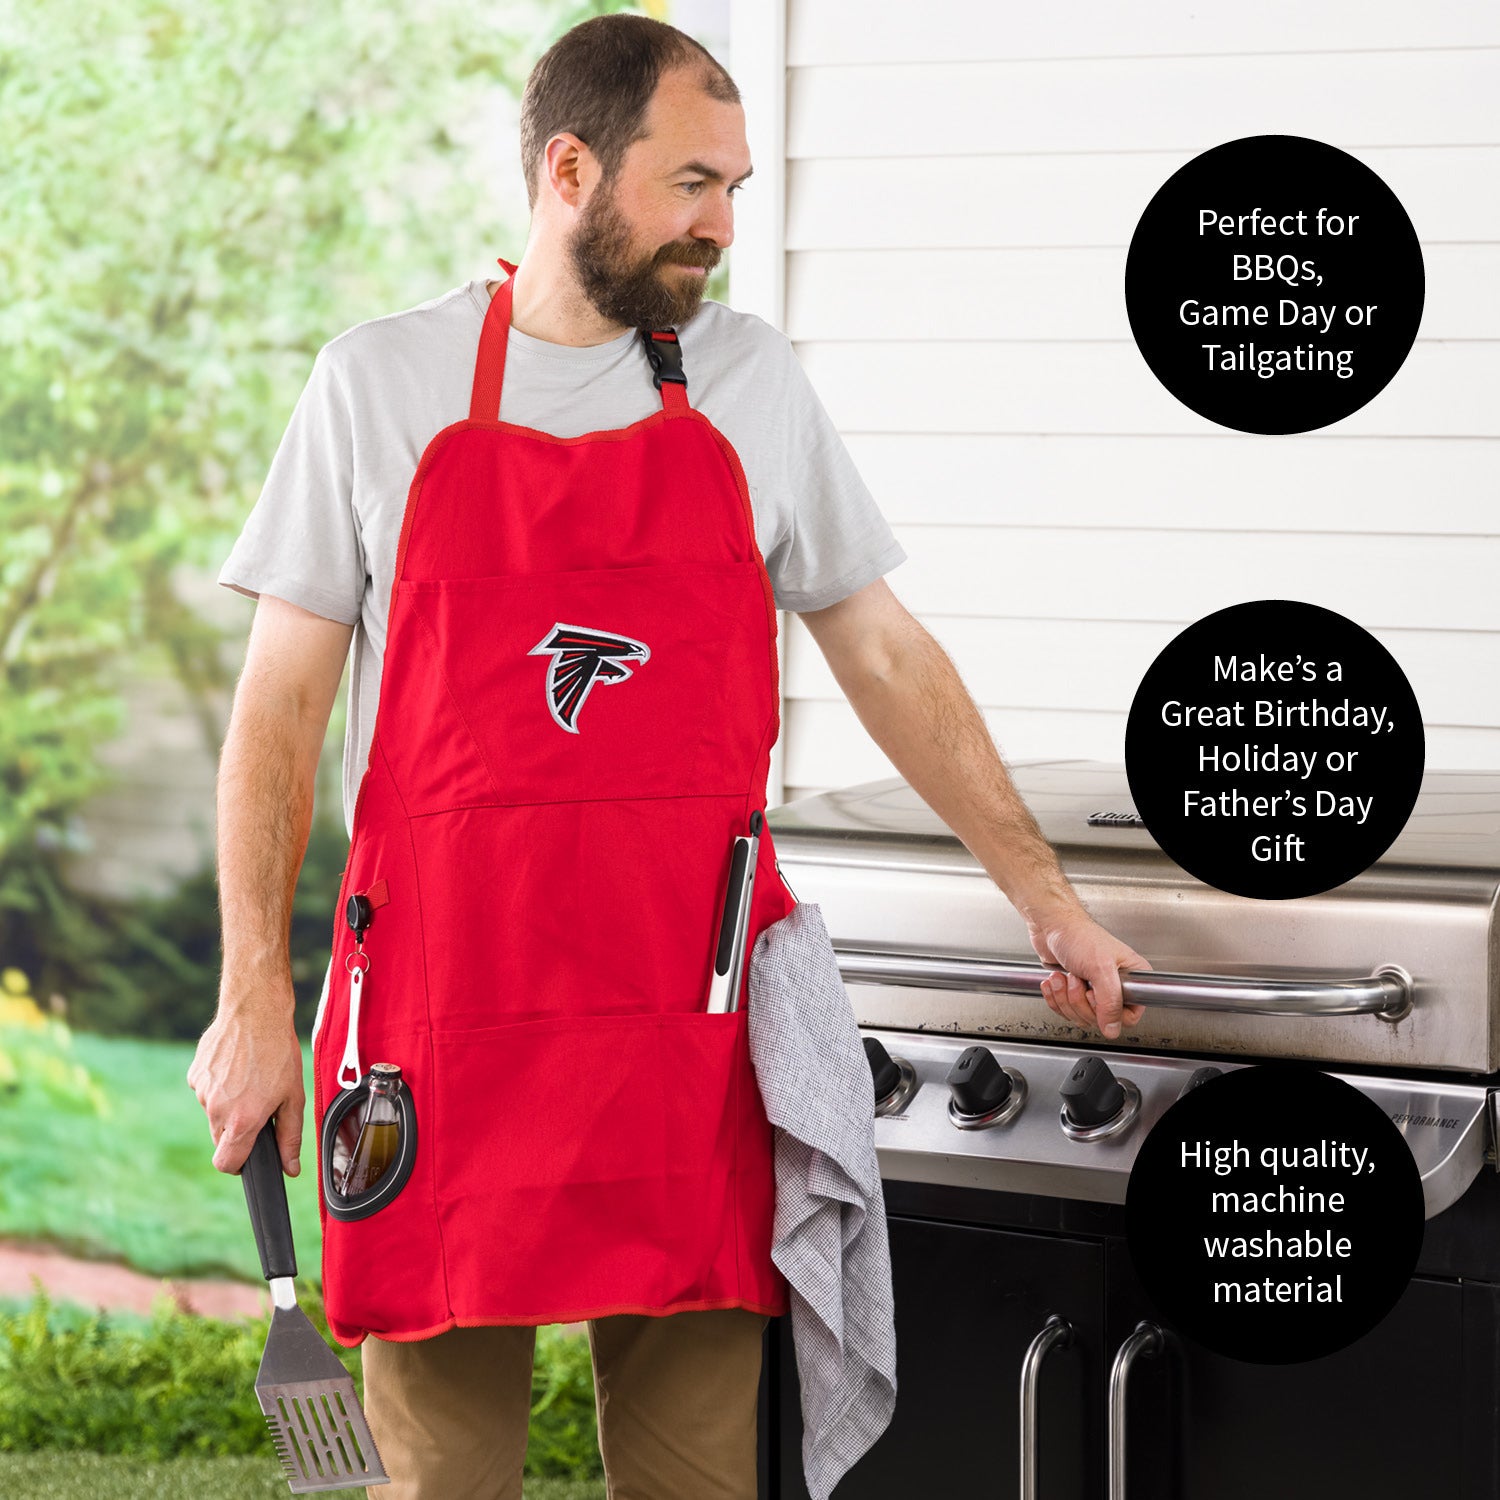 Atlanta Falcons Logo Grilling Utility Apron